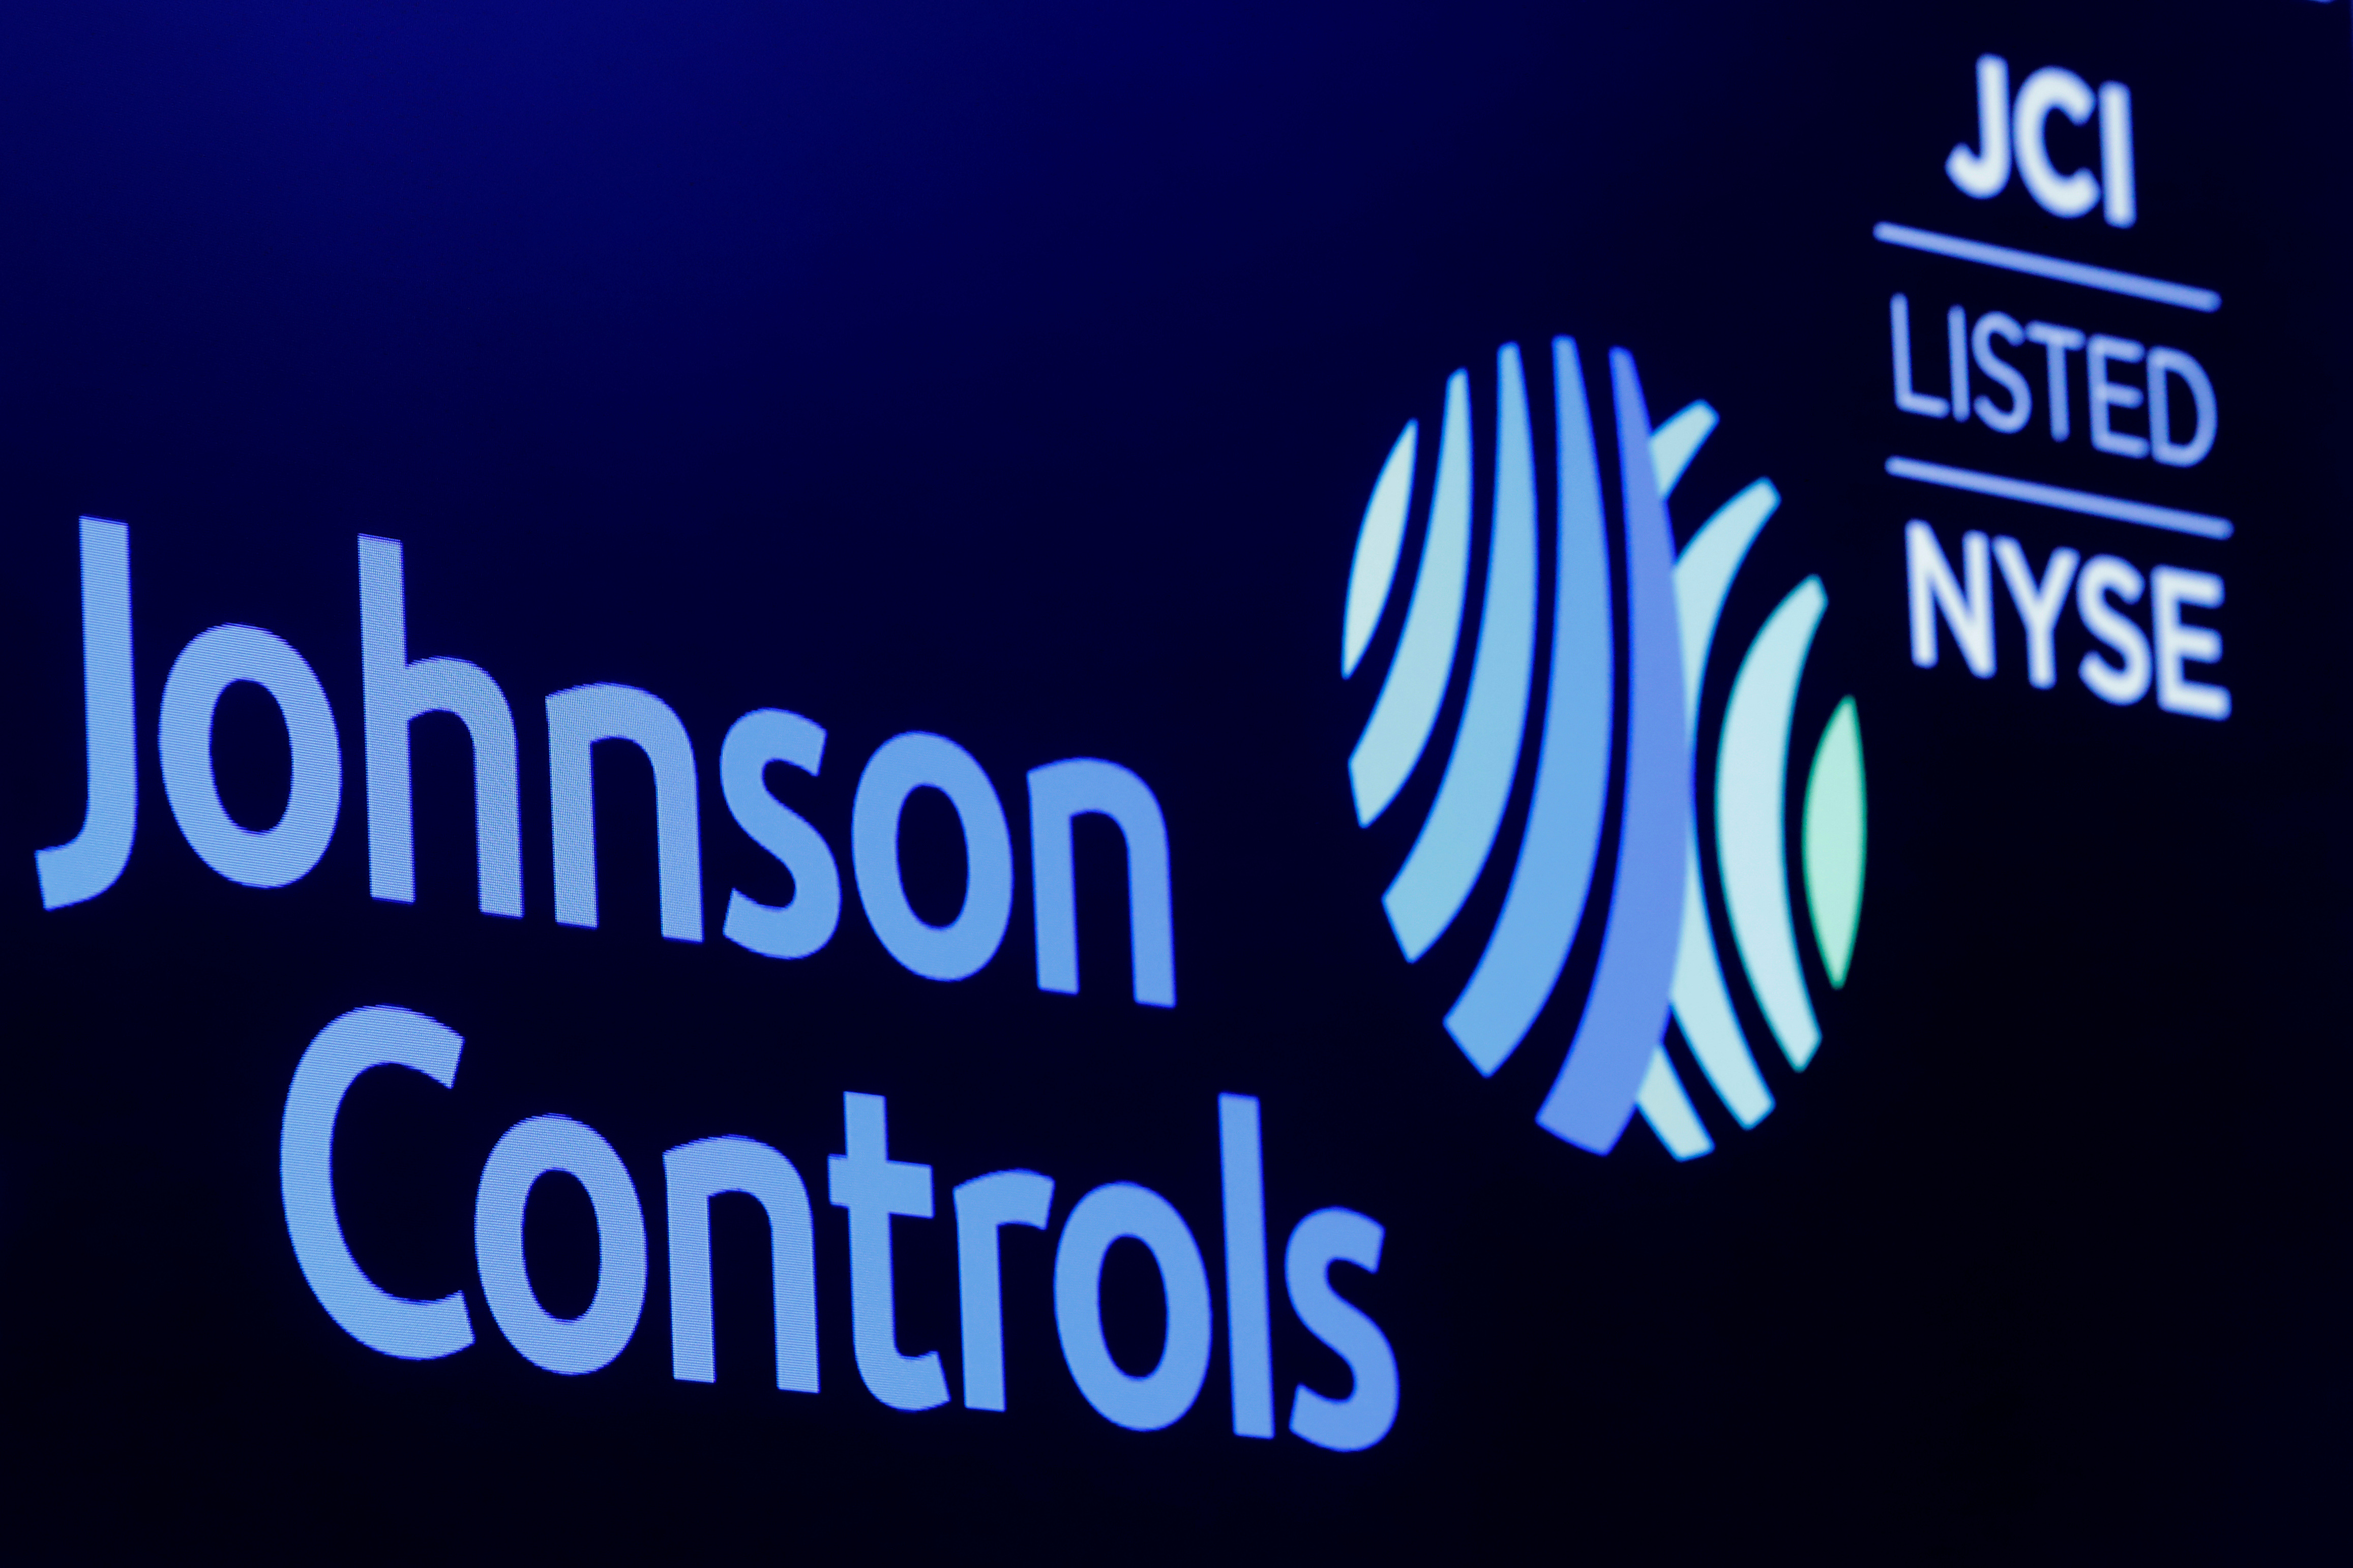 johnson controls logo